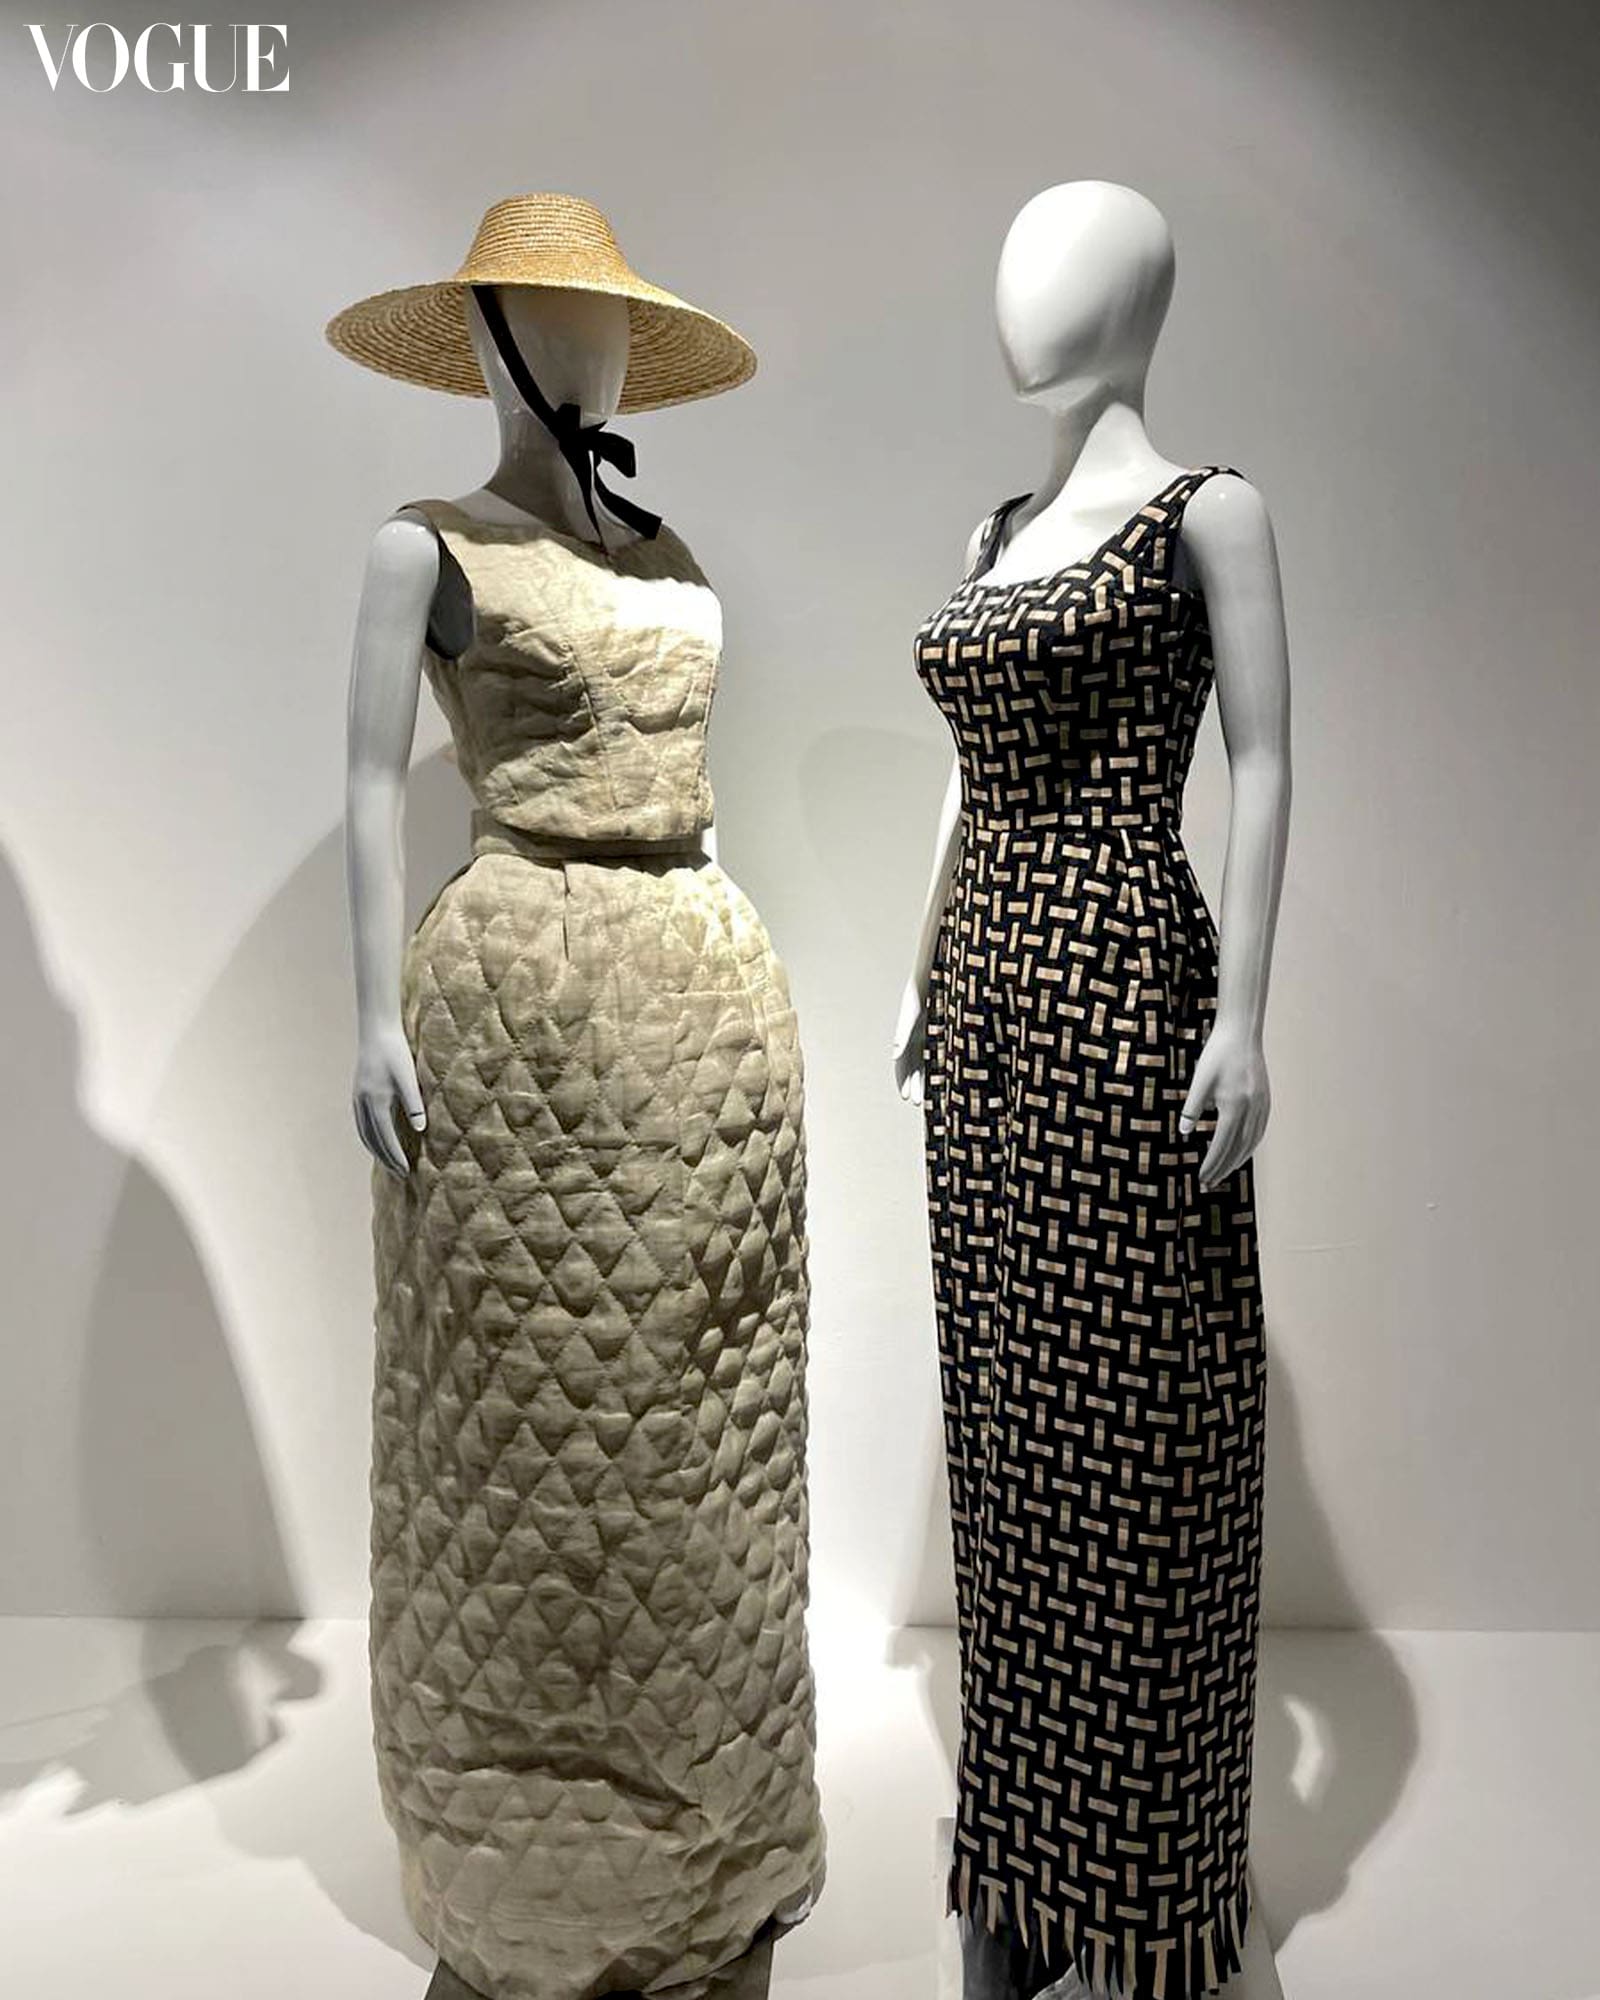 An Audrey Hepburn-inspired dress by Len Cabili and Ivar Aseron